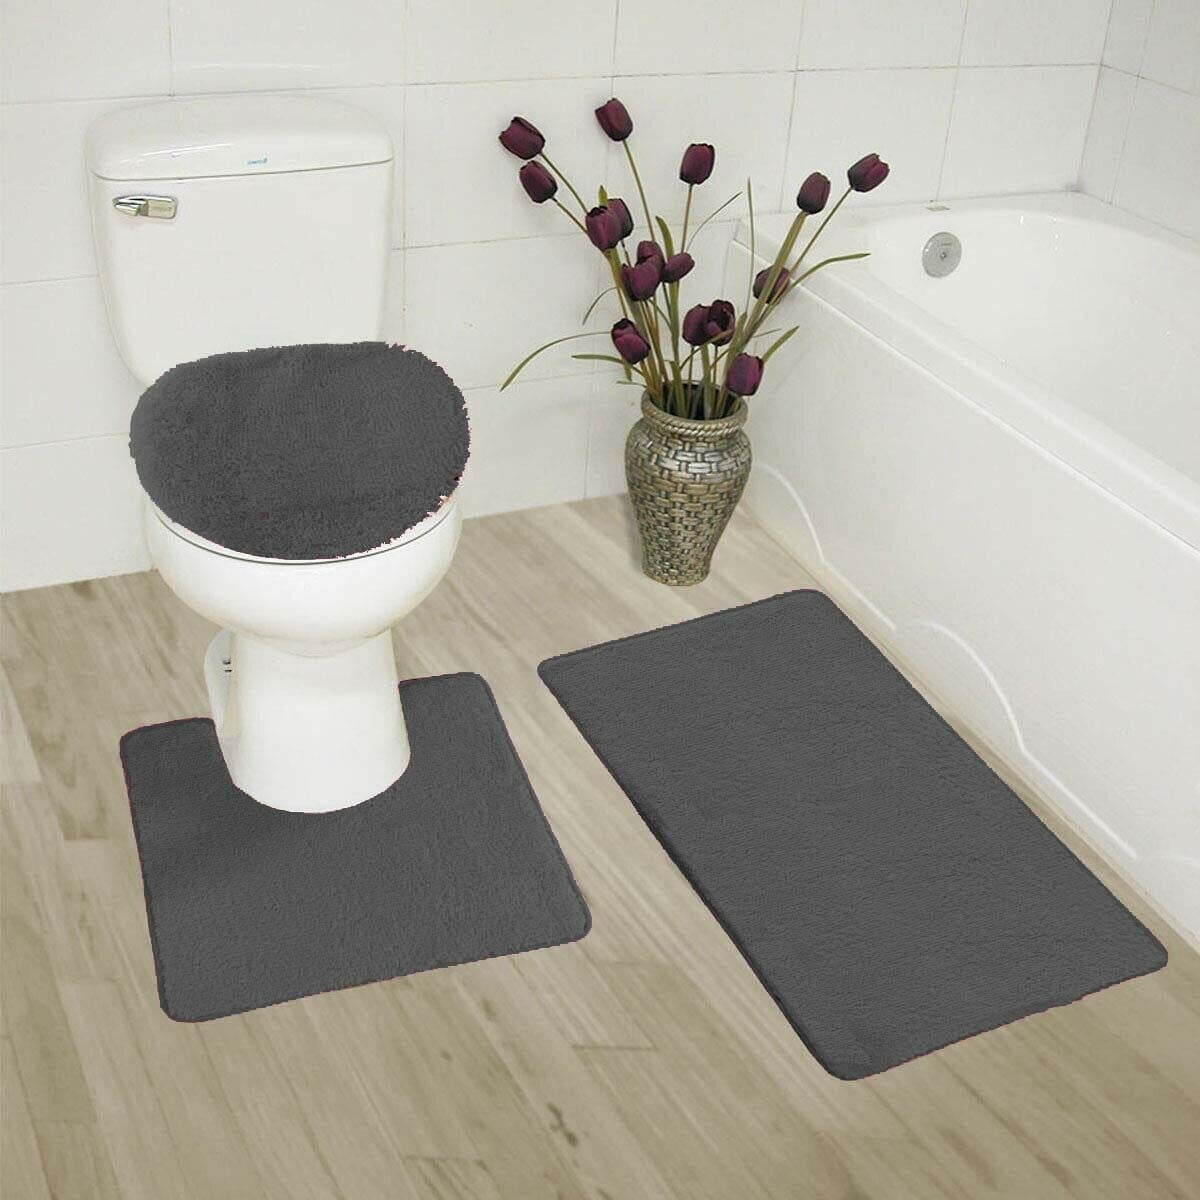 Ziloco 3 Piece Thicken Bath Rugs Set Clearance, Bath Rug + Contour Mat + Toilet Seat Cover, Super Long Soft Microfiber Water Absorbent & Non-Slip Bathroom